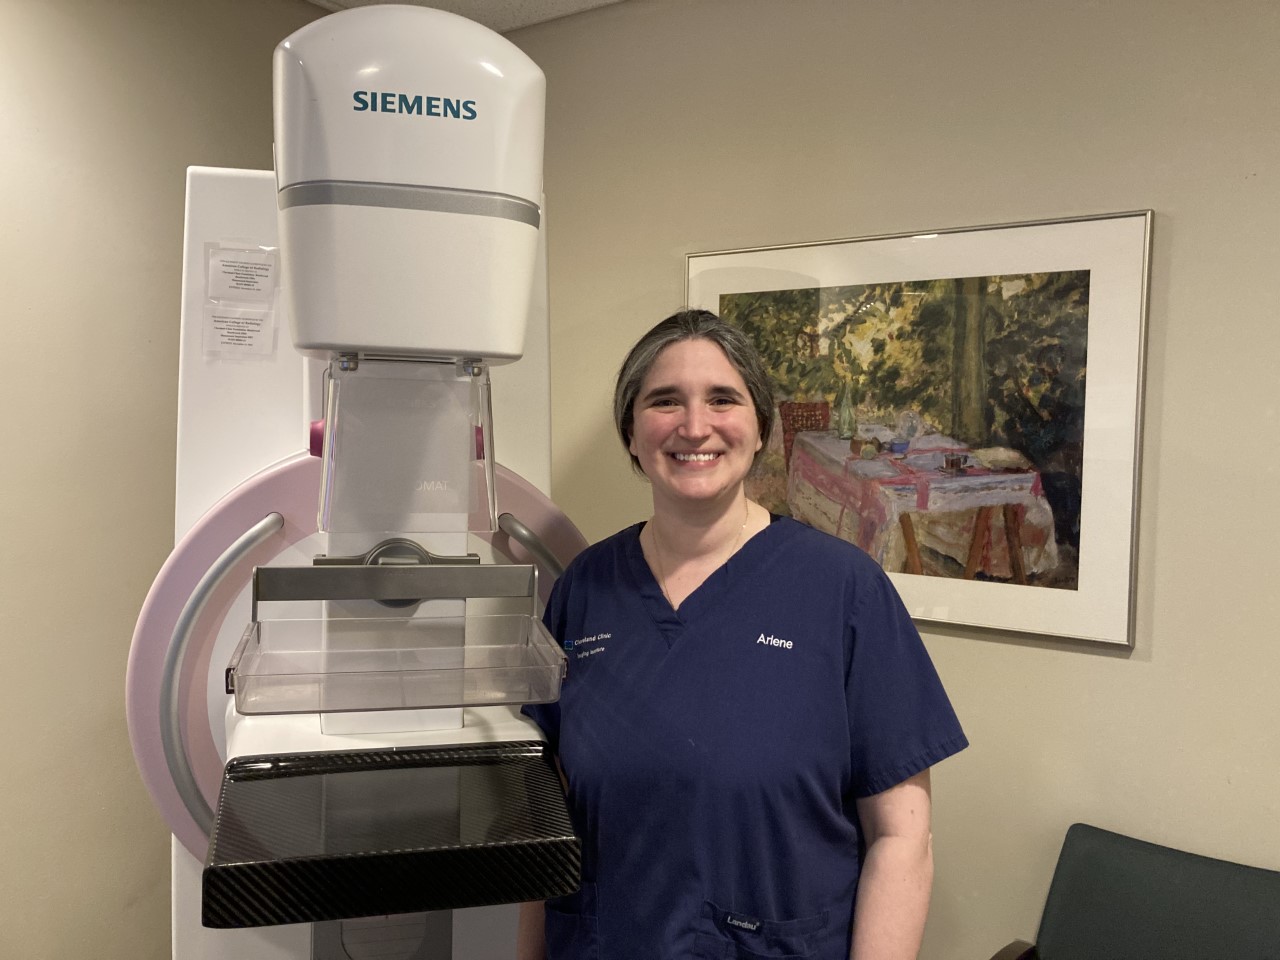  Meet an MRI Technician: Arlene | Health Professions Education | Cleveland Clinic